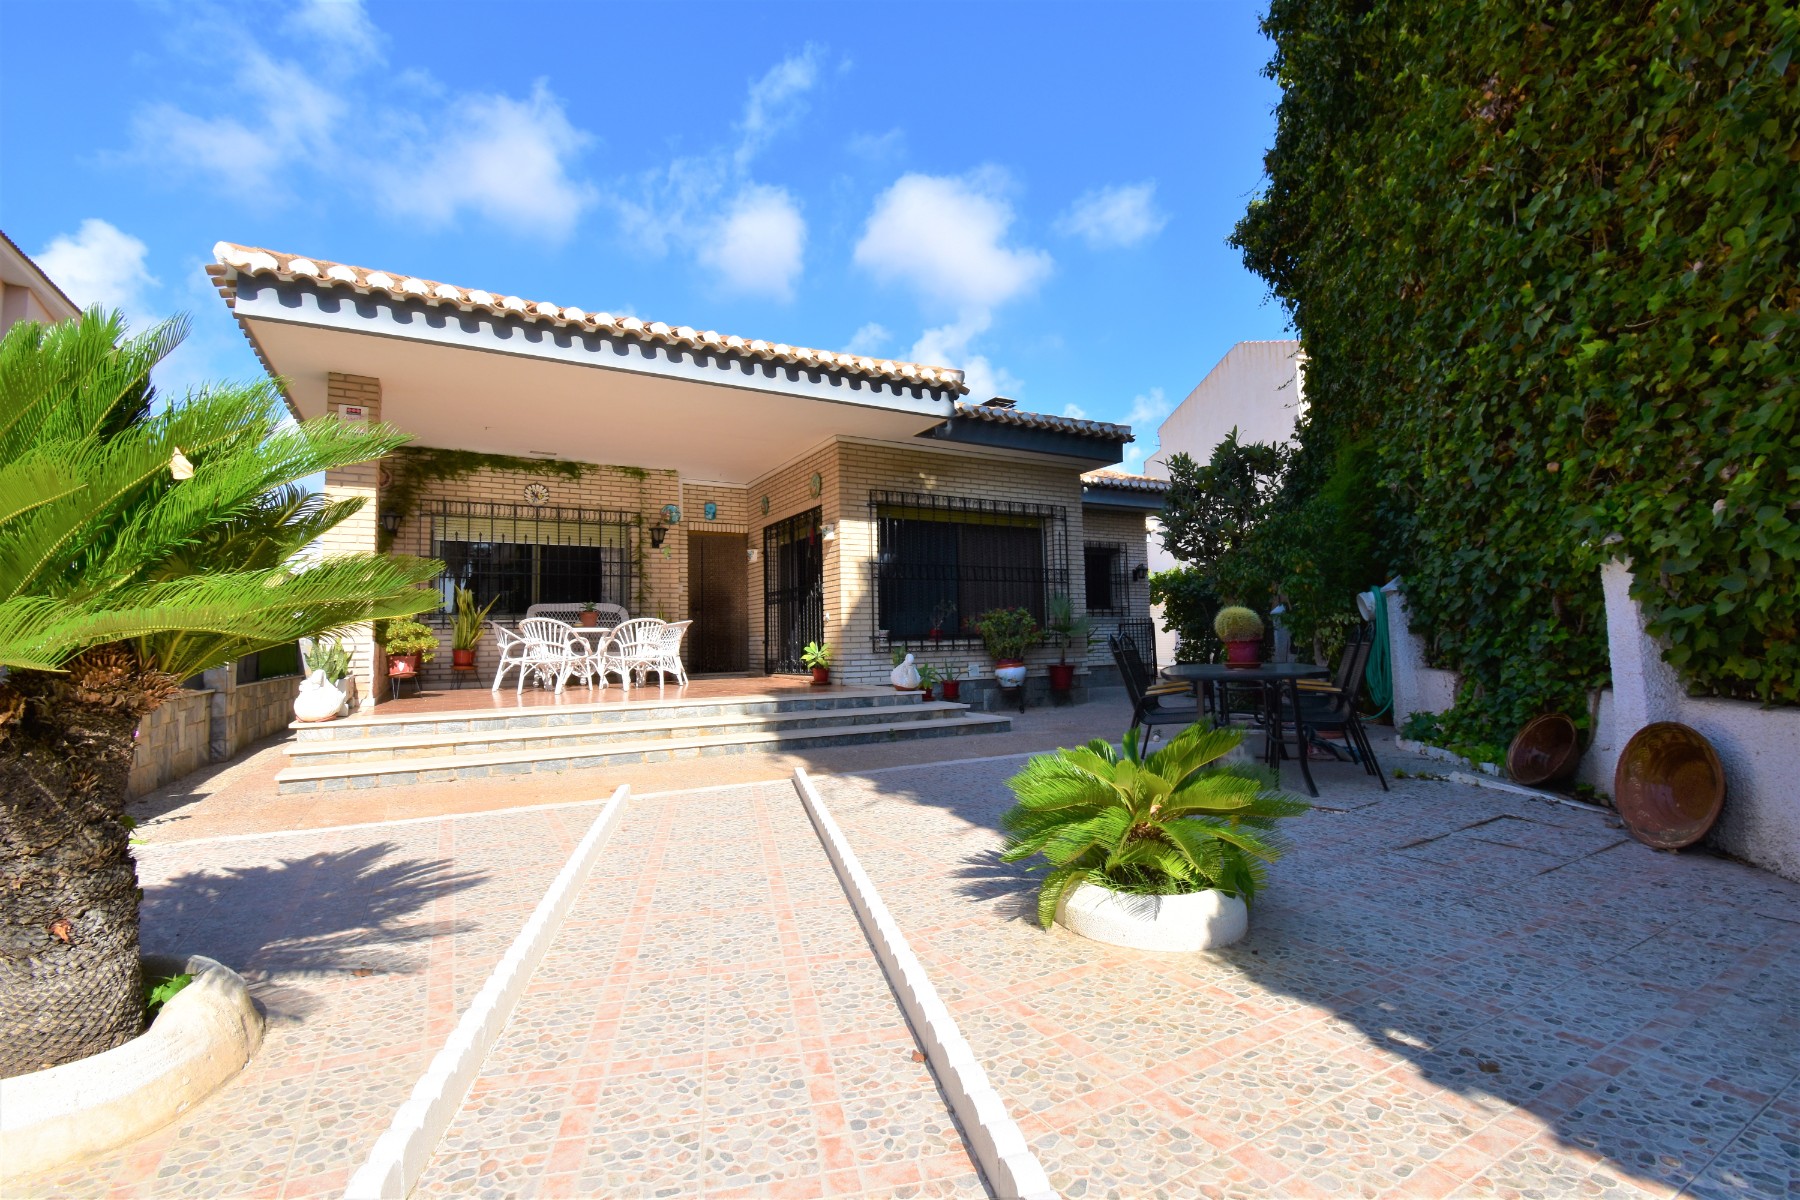 For sale: 4 bedroom house / villa in San Pedro del Pinatar, Costa Calida